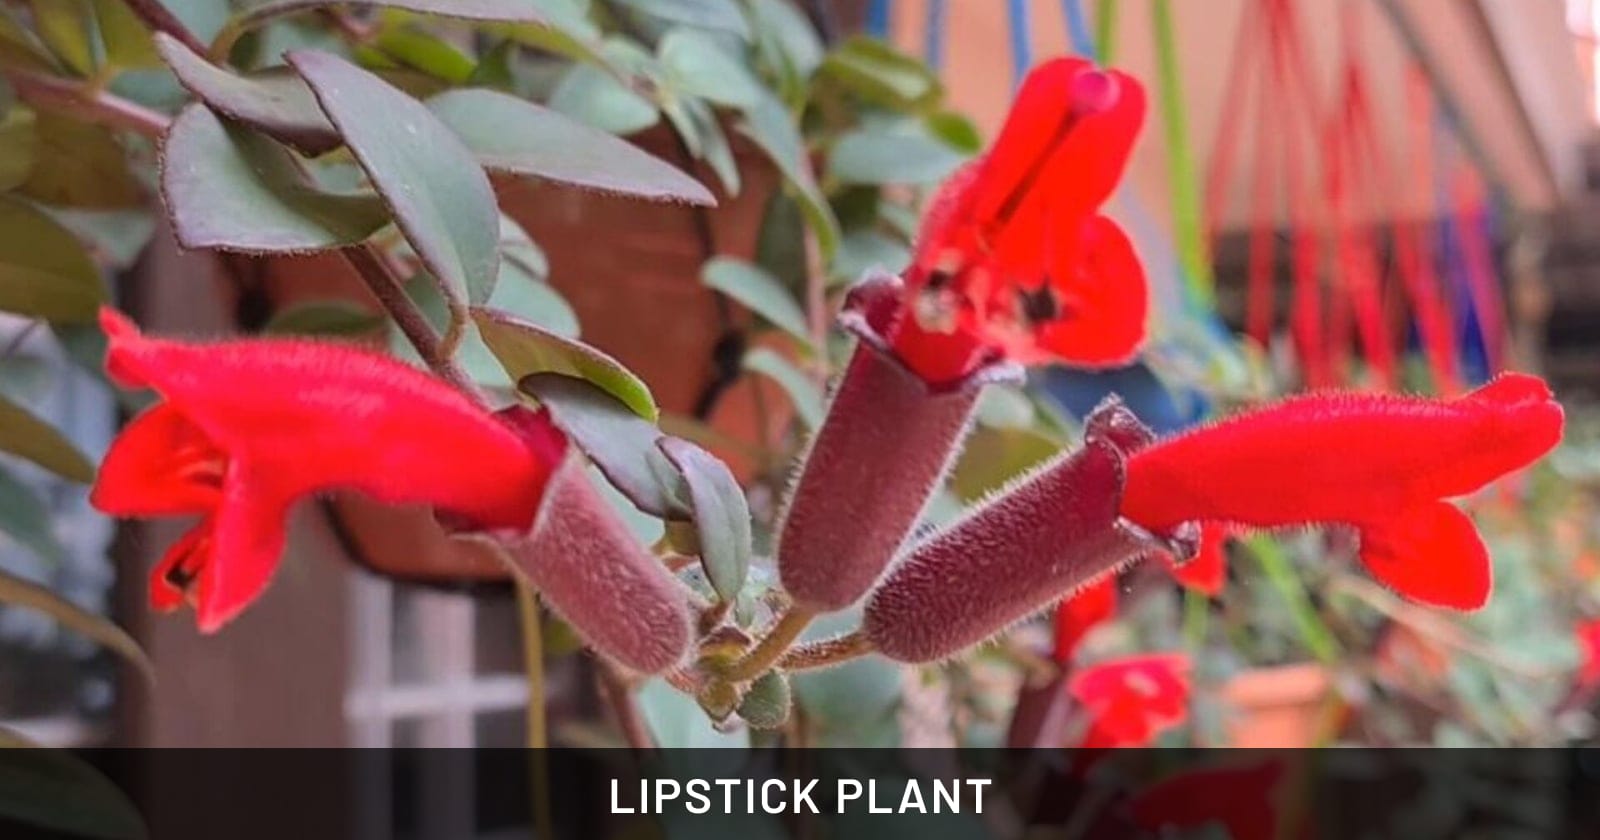 LipStick plant